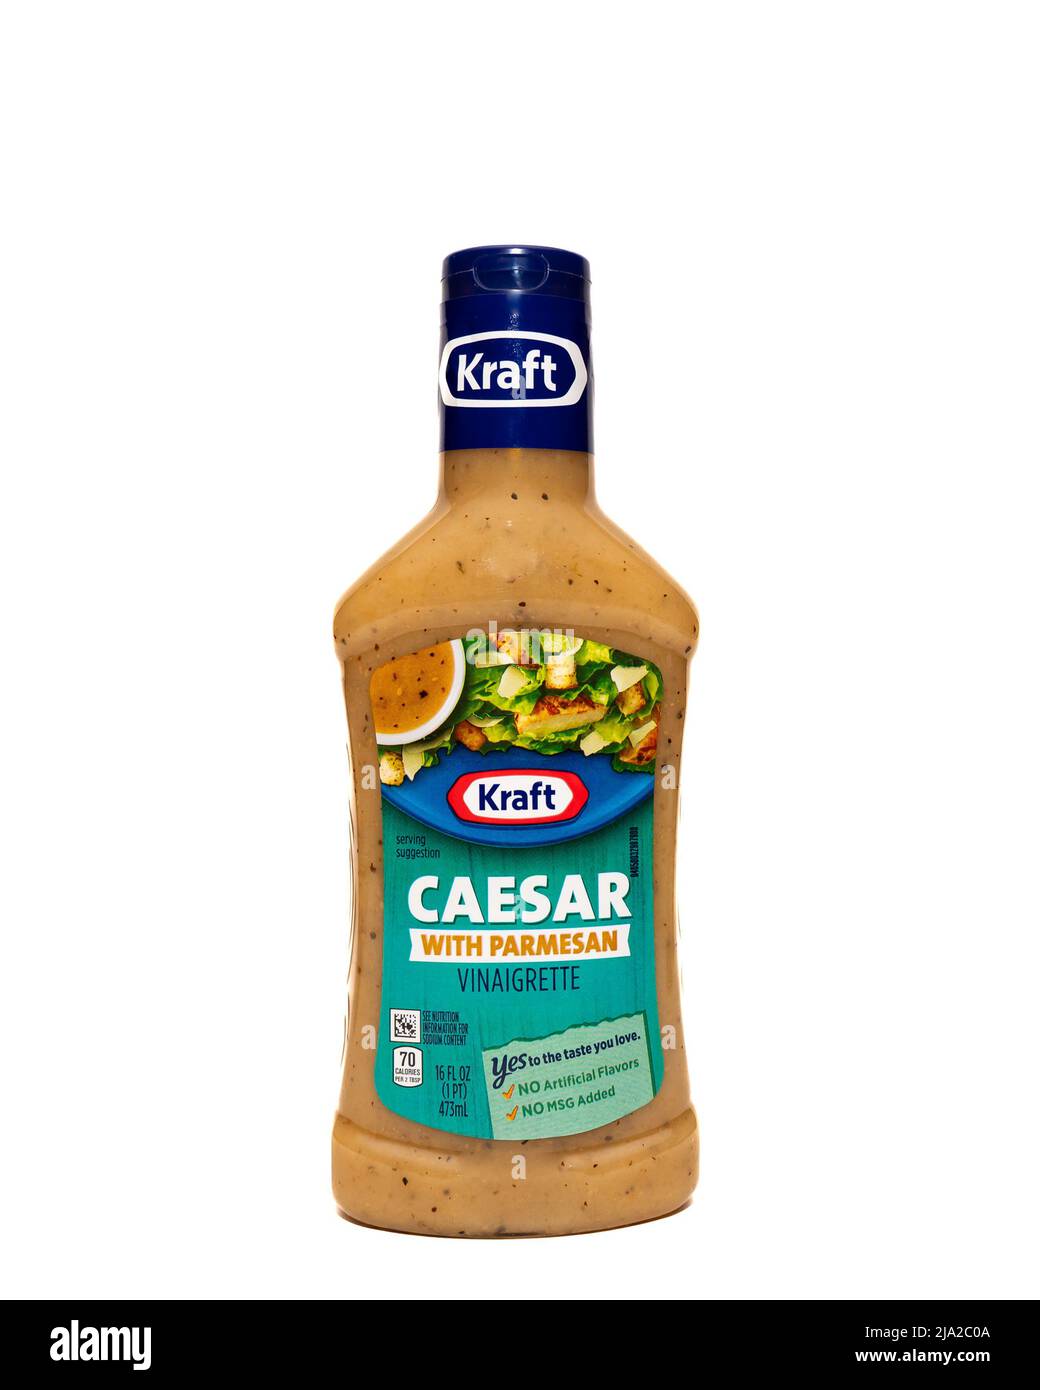 A plastic bottle of Kraft Caesar salad dressing with parmesan vinaigrette, isolated on white Stock Photo